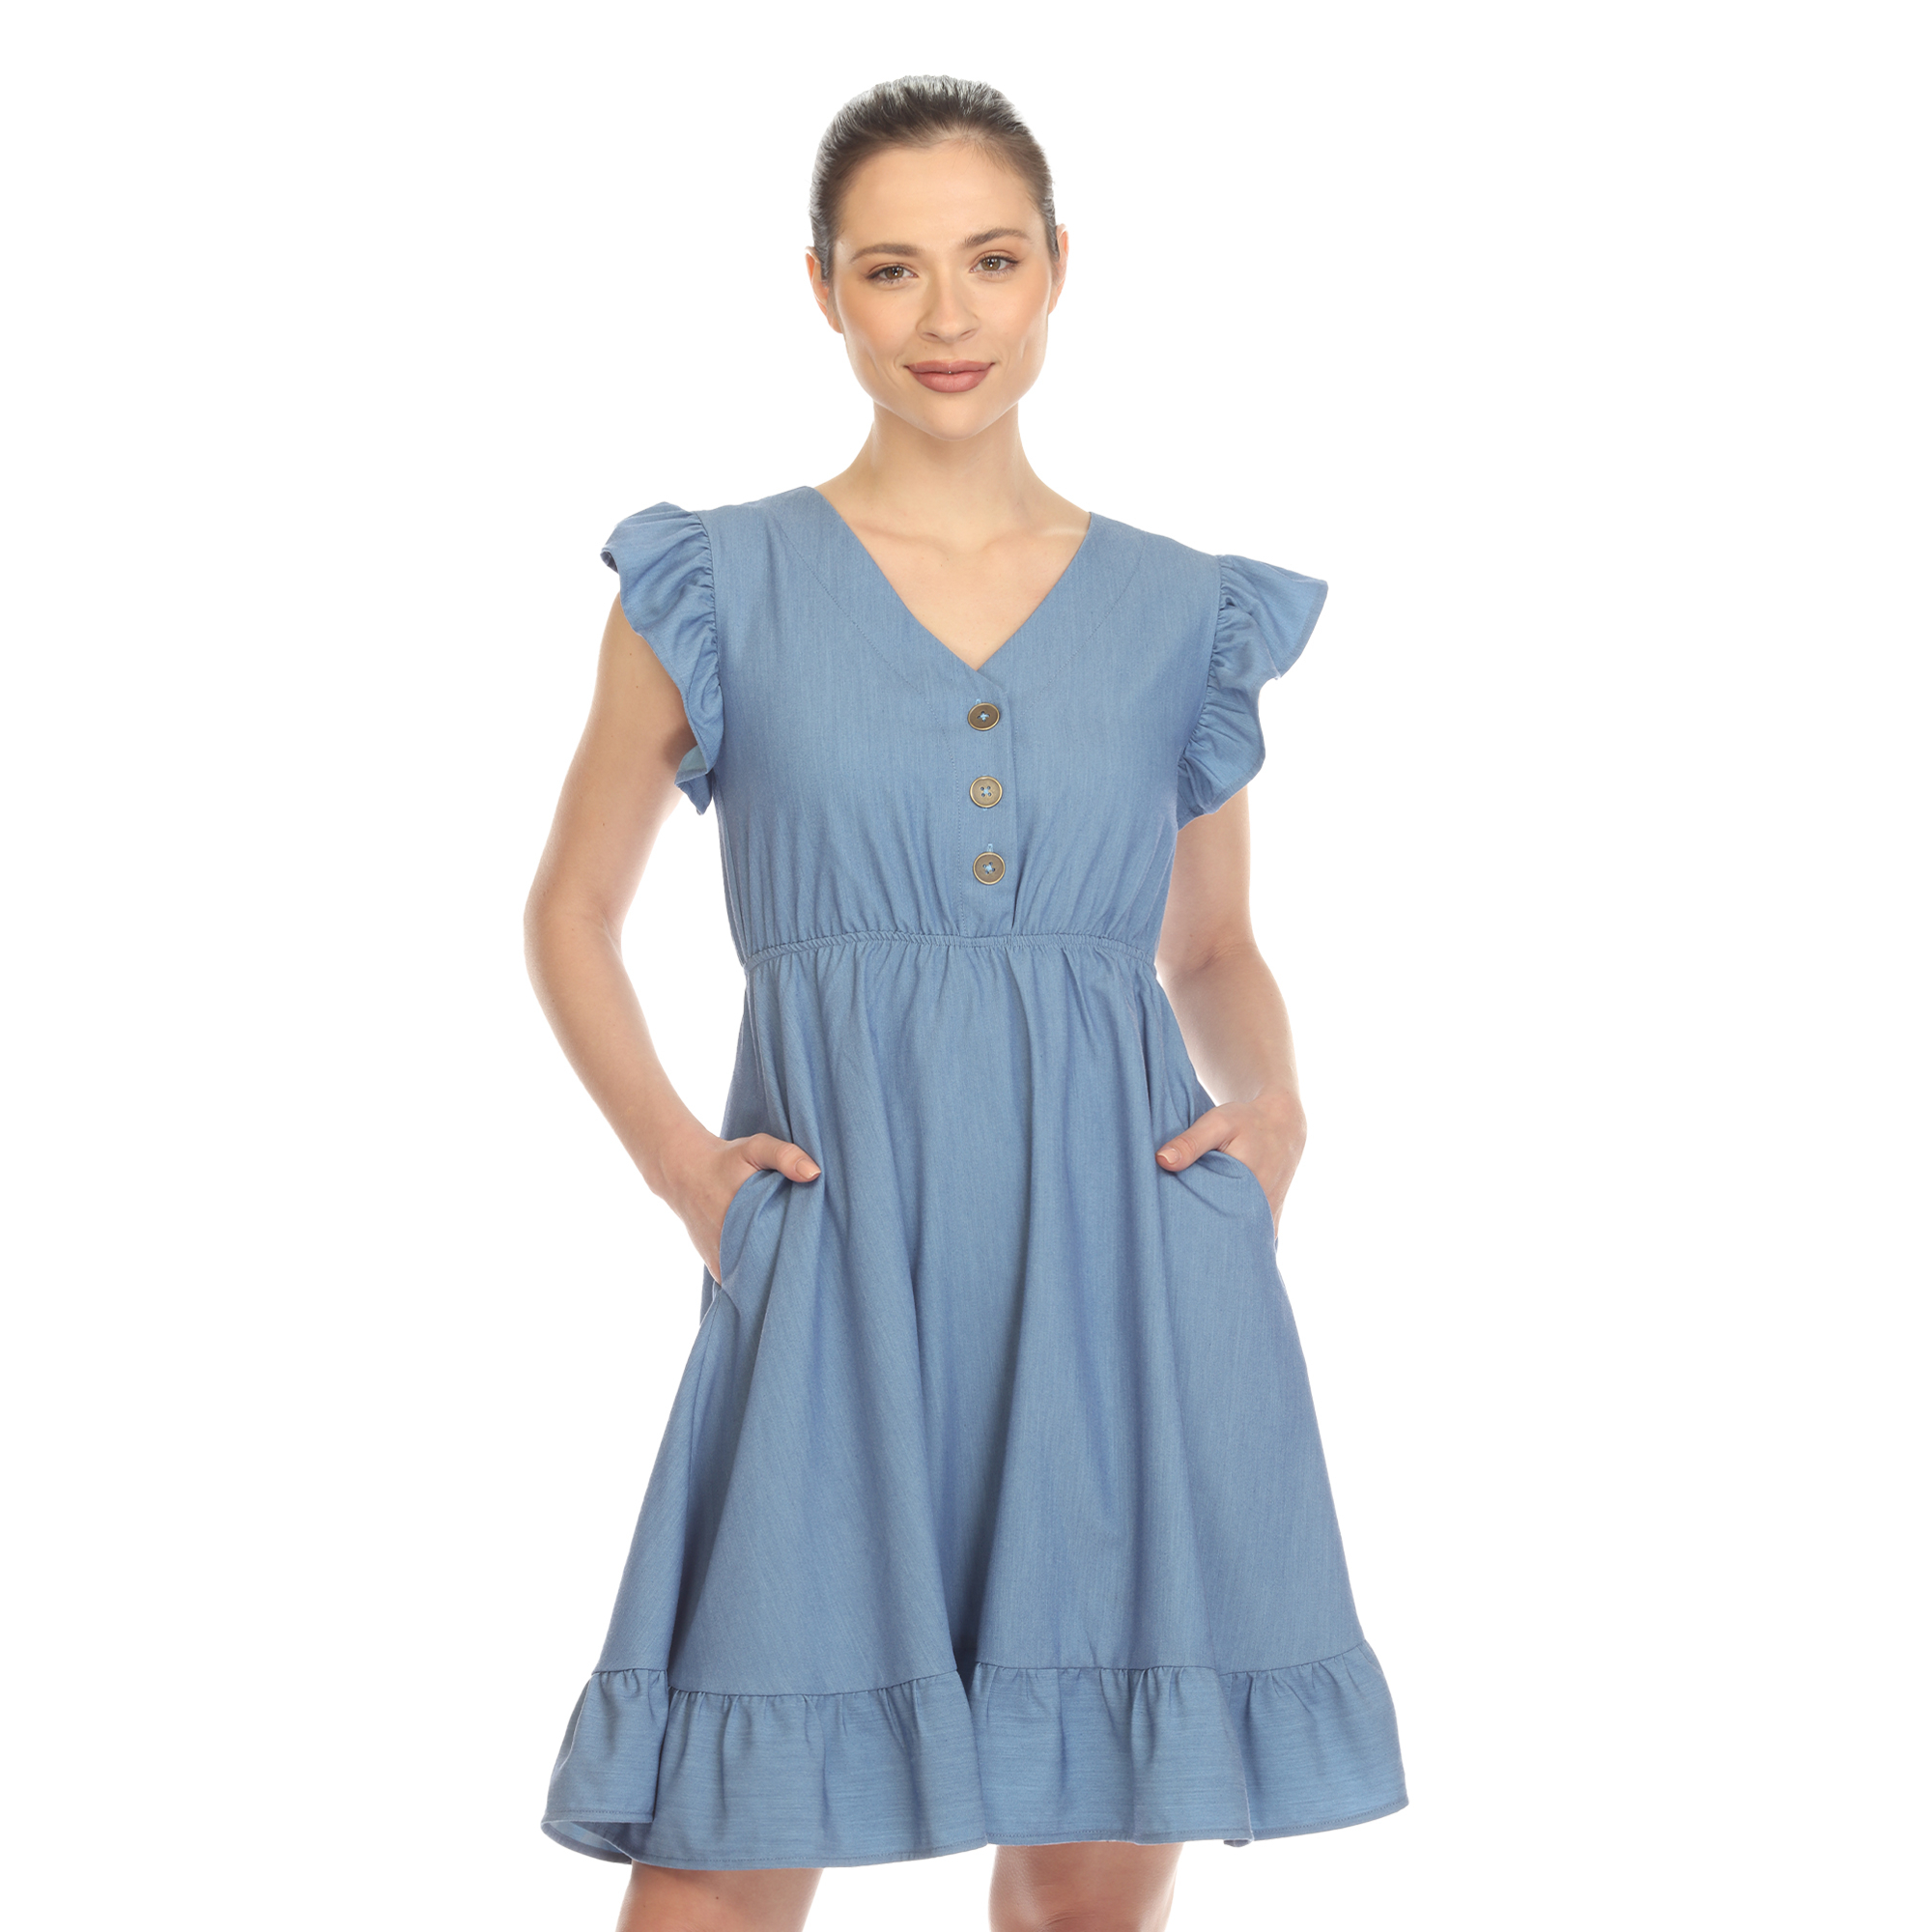 White Mark Women's Ruffle Sleeve Empire Waist V-Neck Babydoll Dress - Blue, Small